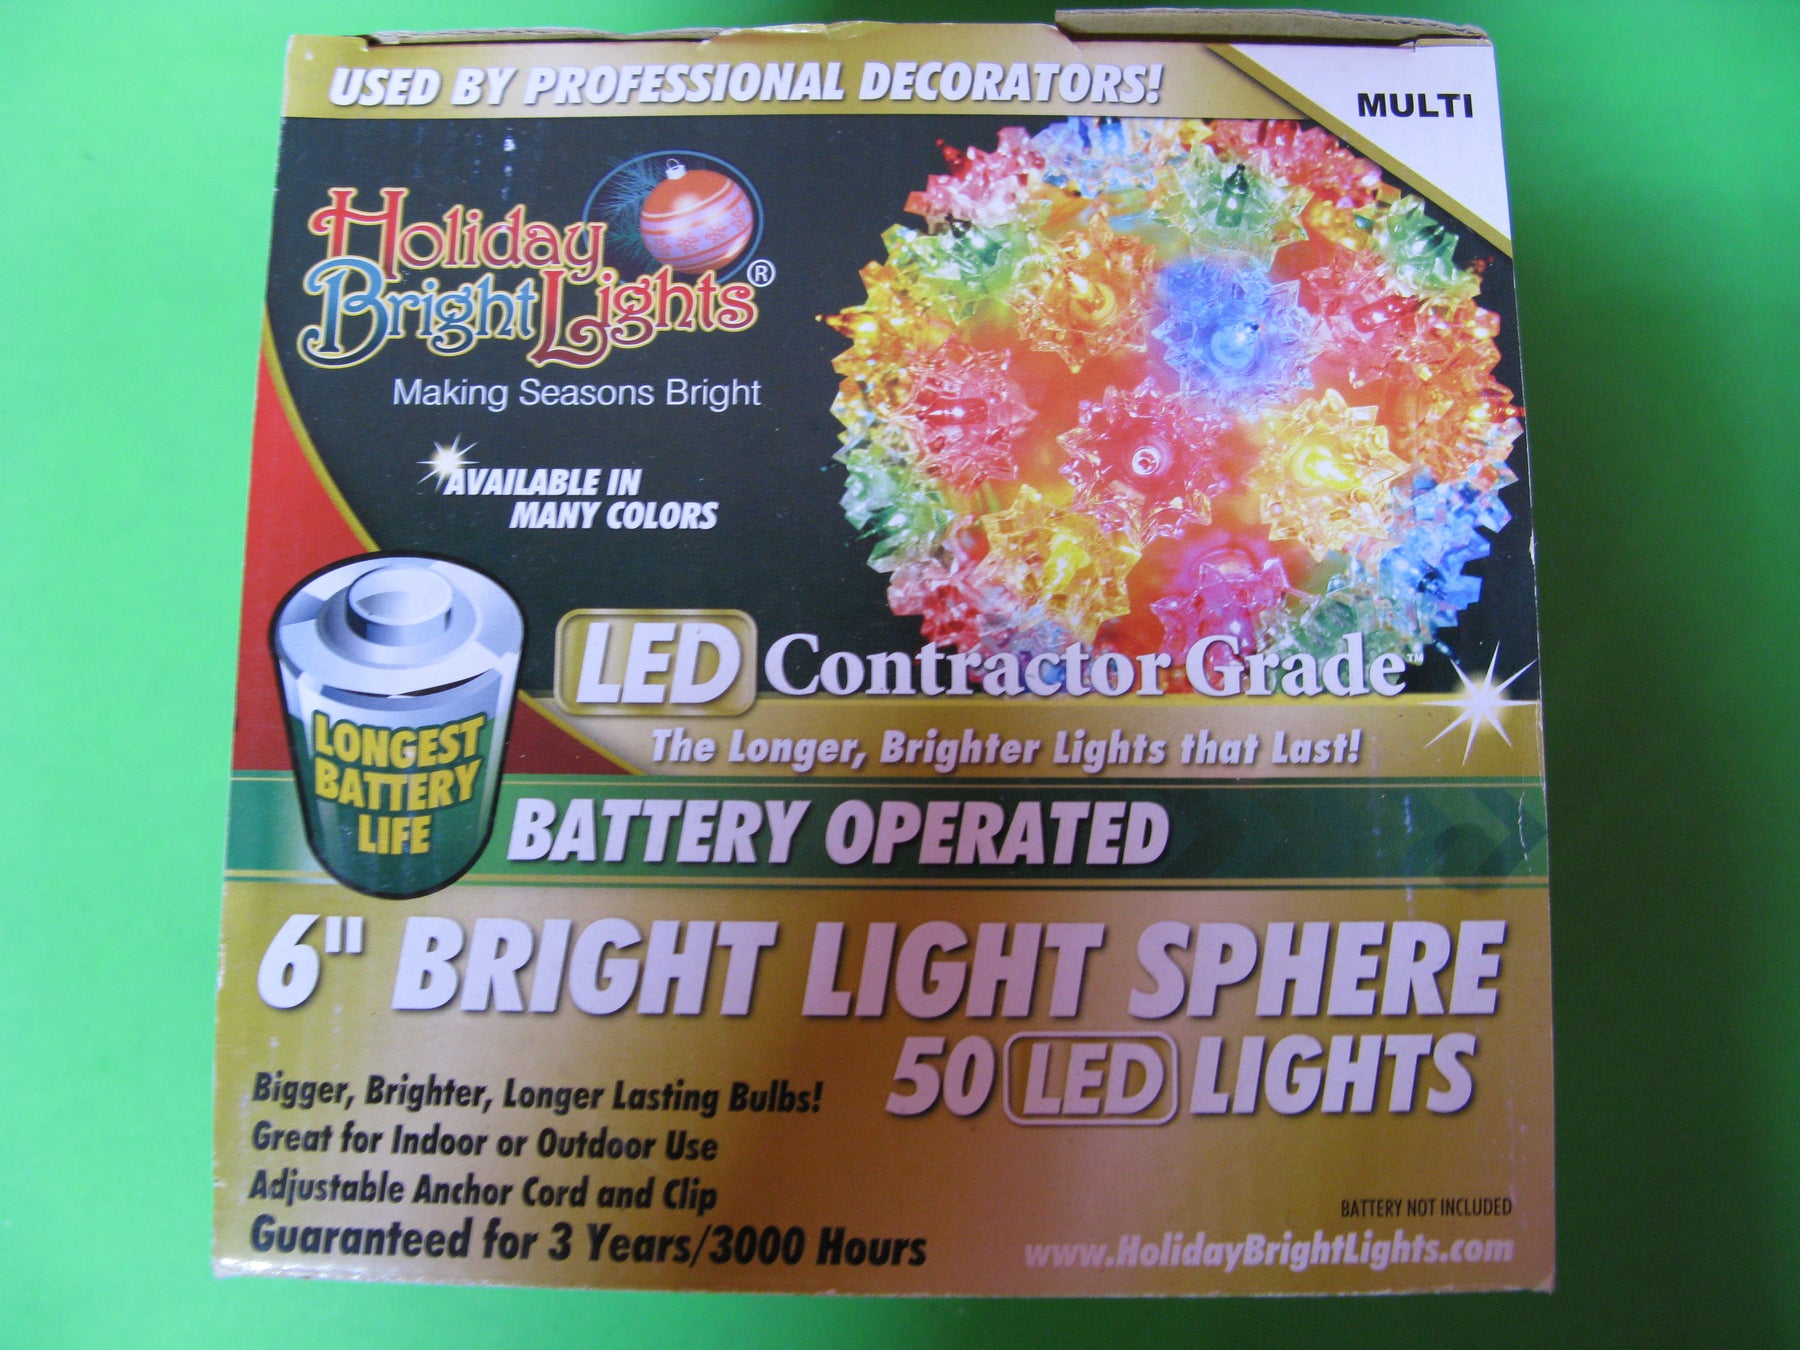 6" Bright Light Sphere